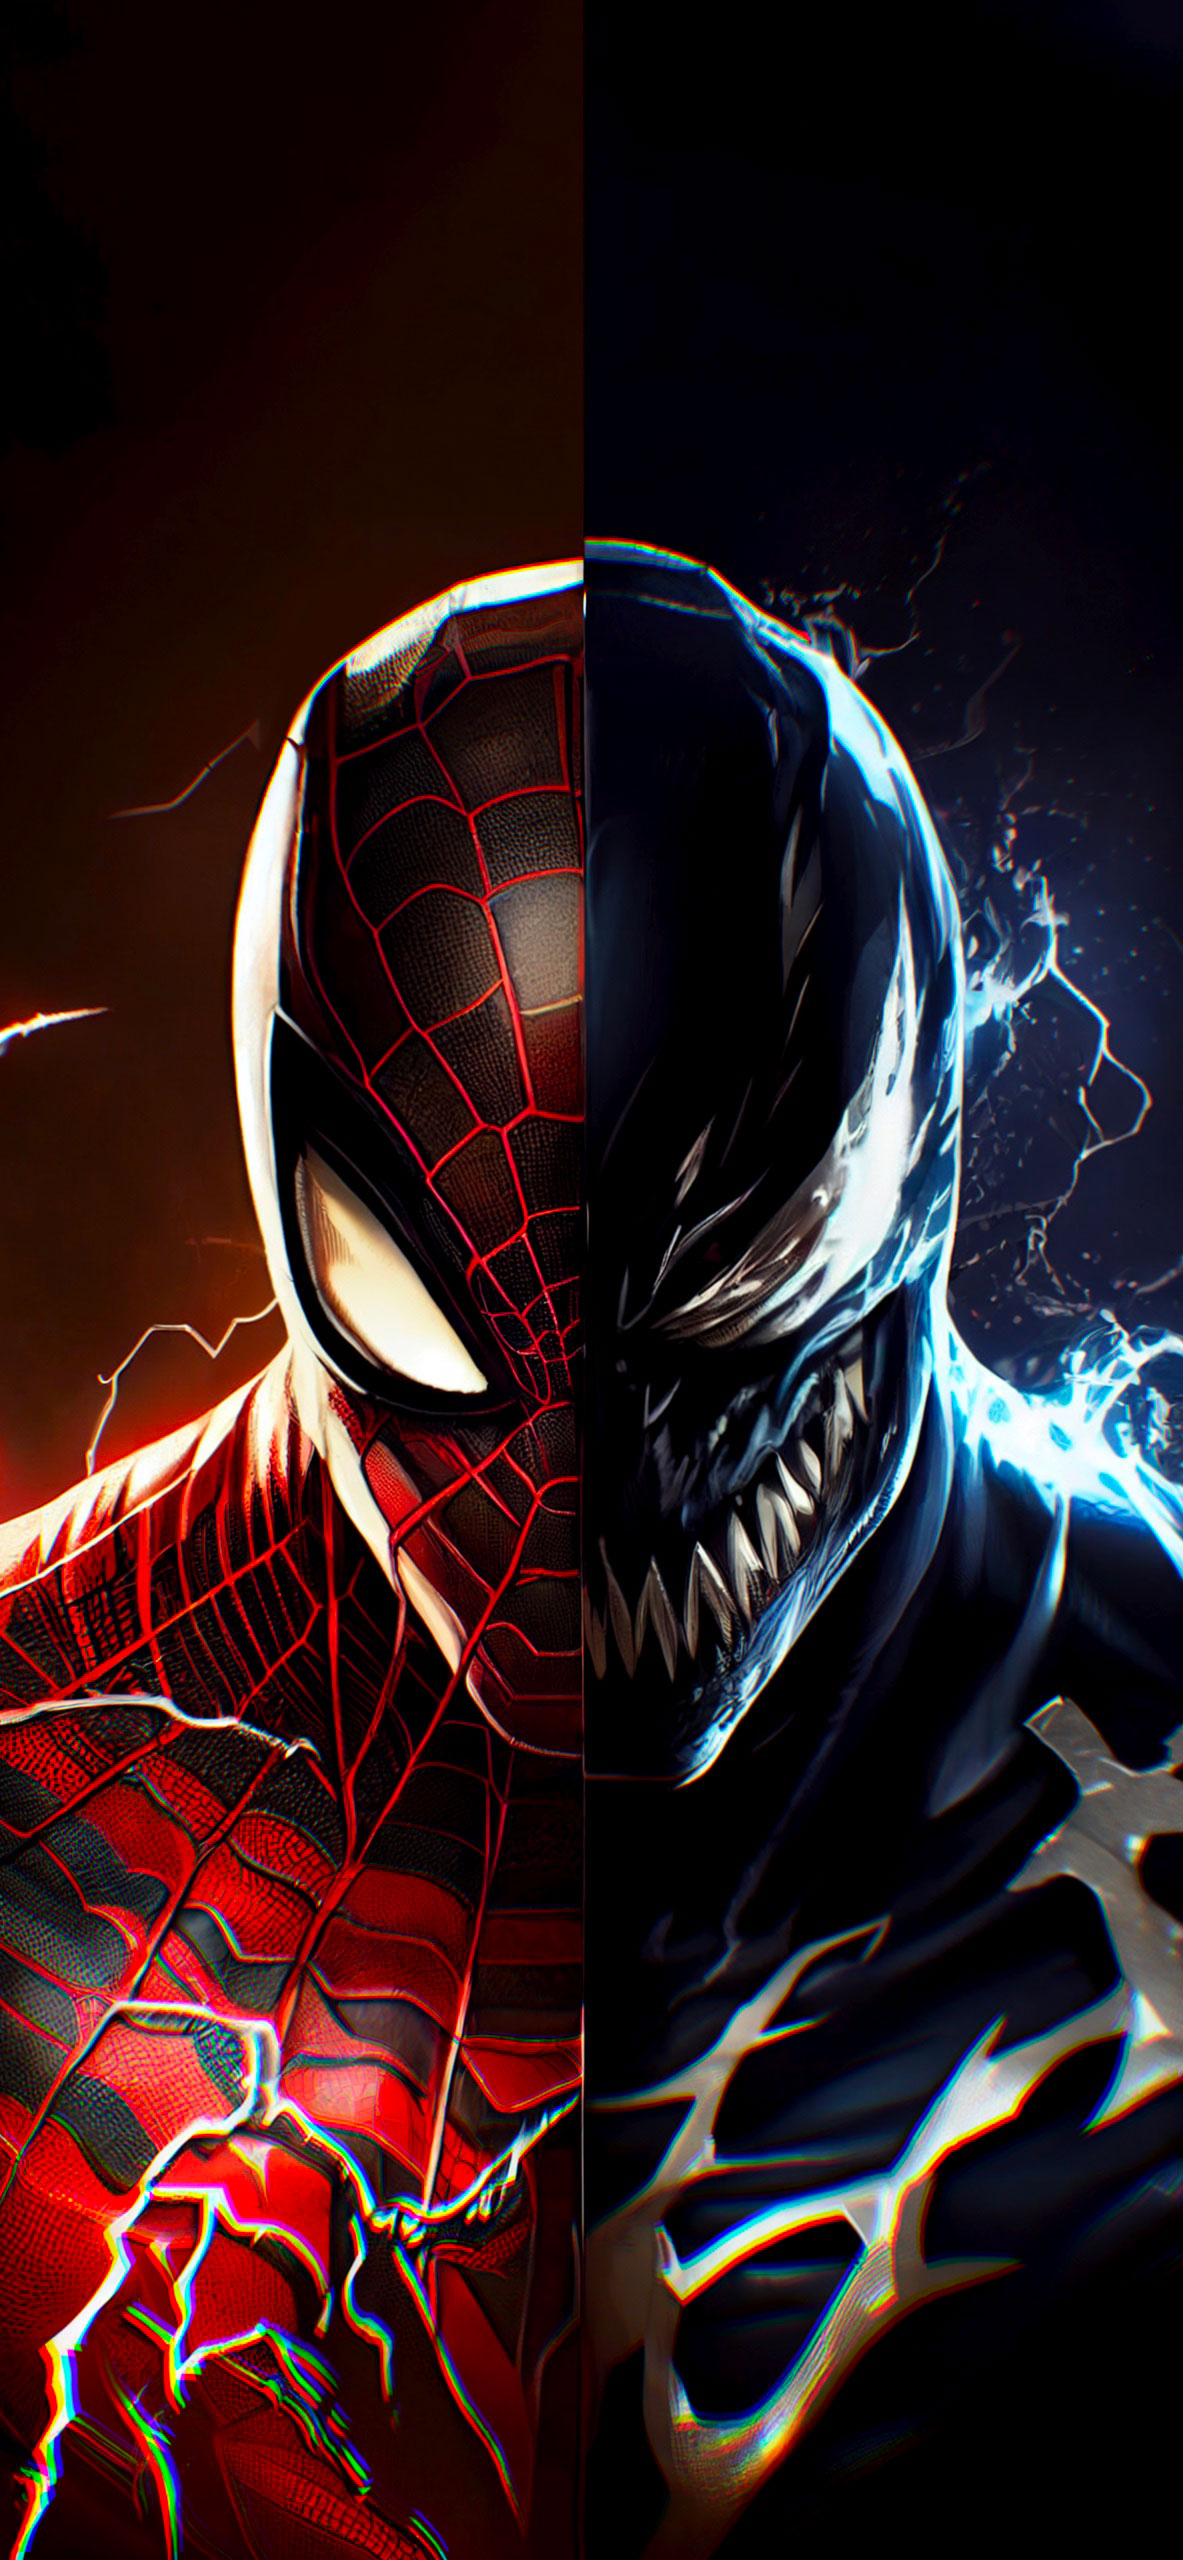 Spider-Man / Venom Wallpaper Phone - Cool Spiderman Wallpaper